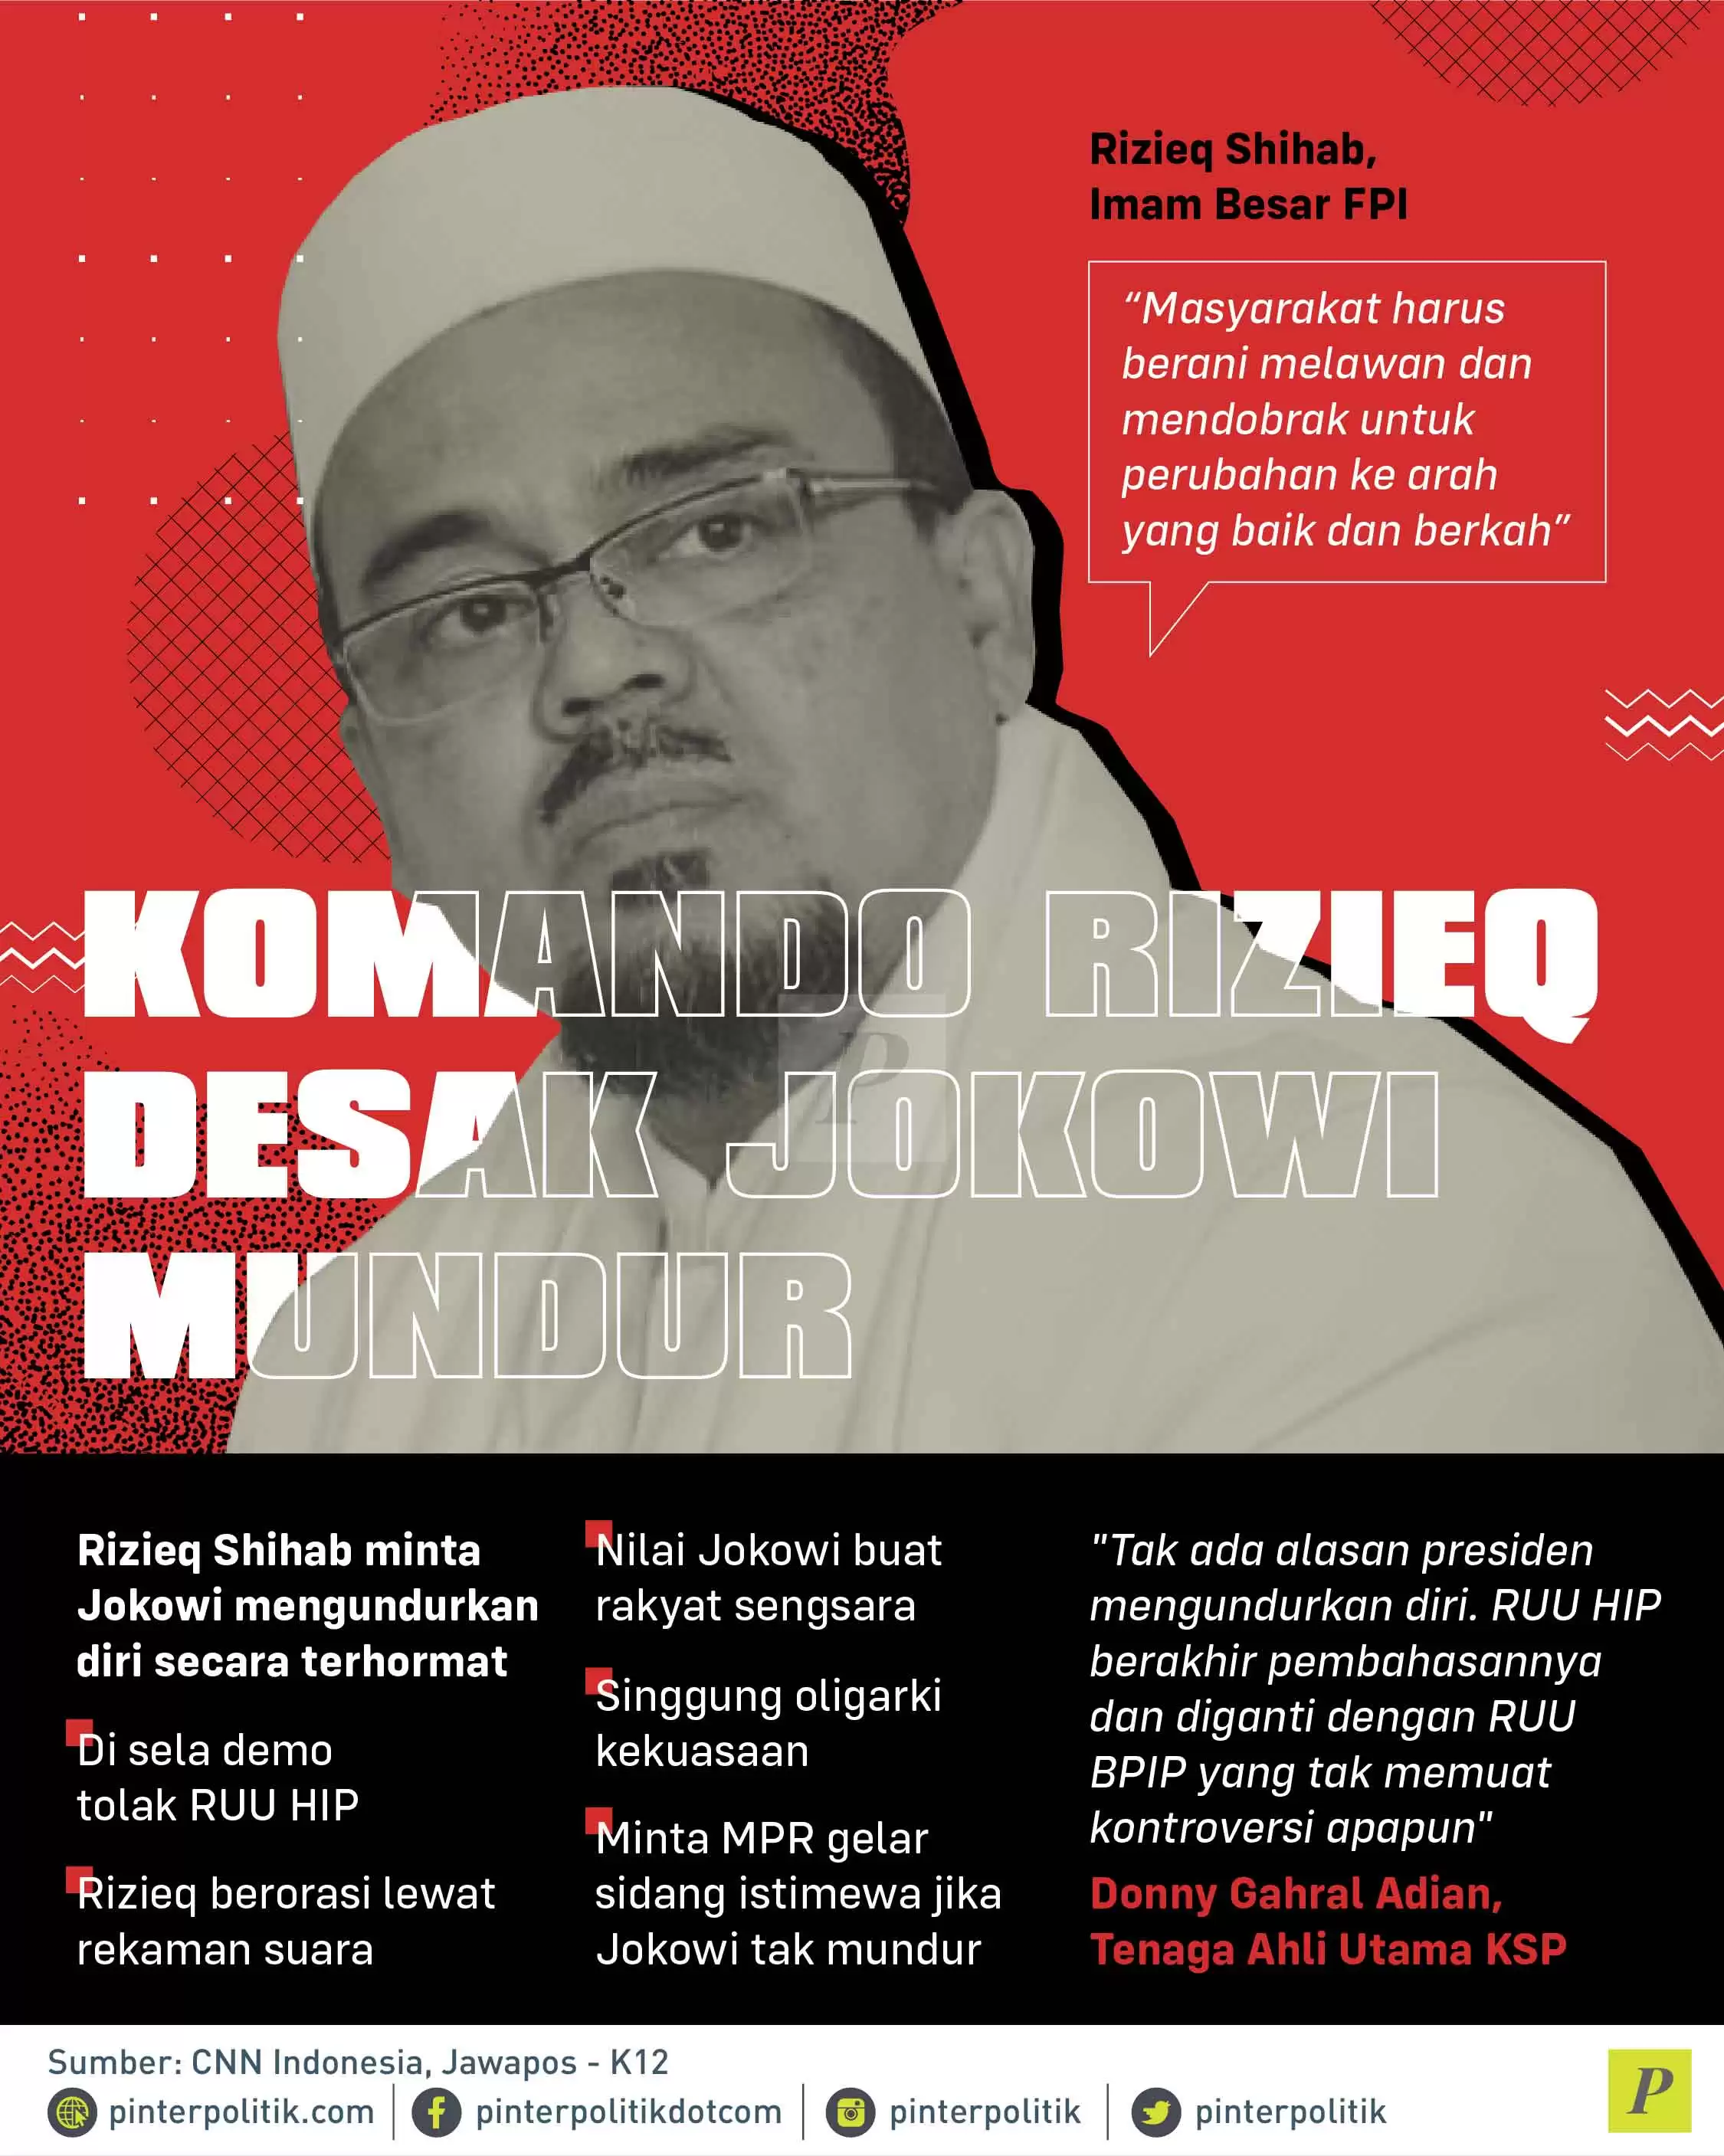 Komando Rizieq Desak Jokowi Mundur